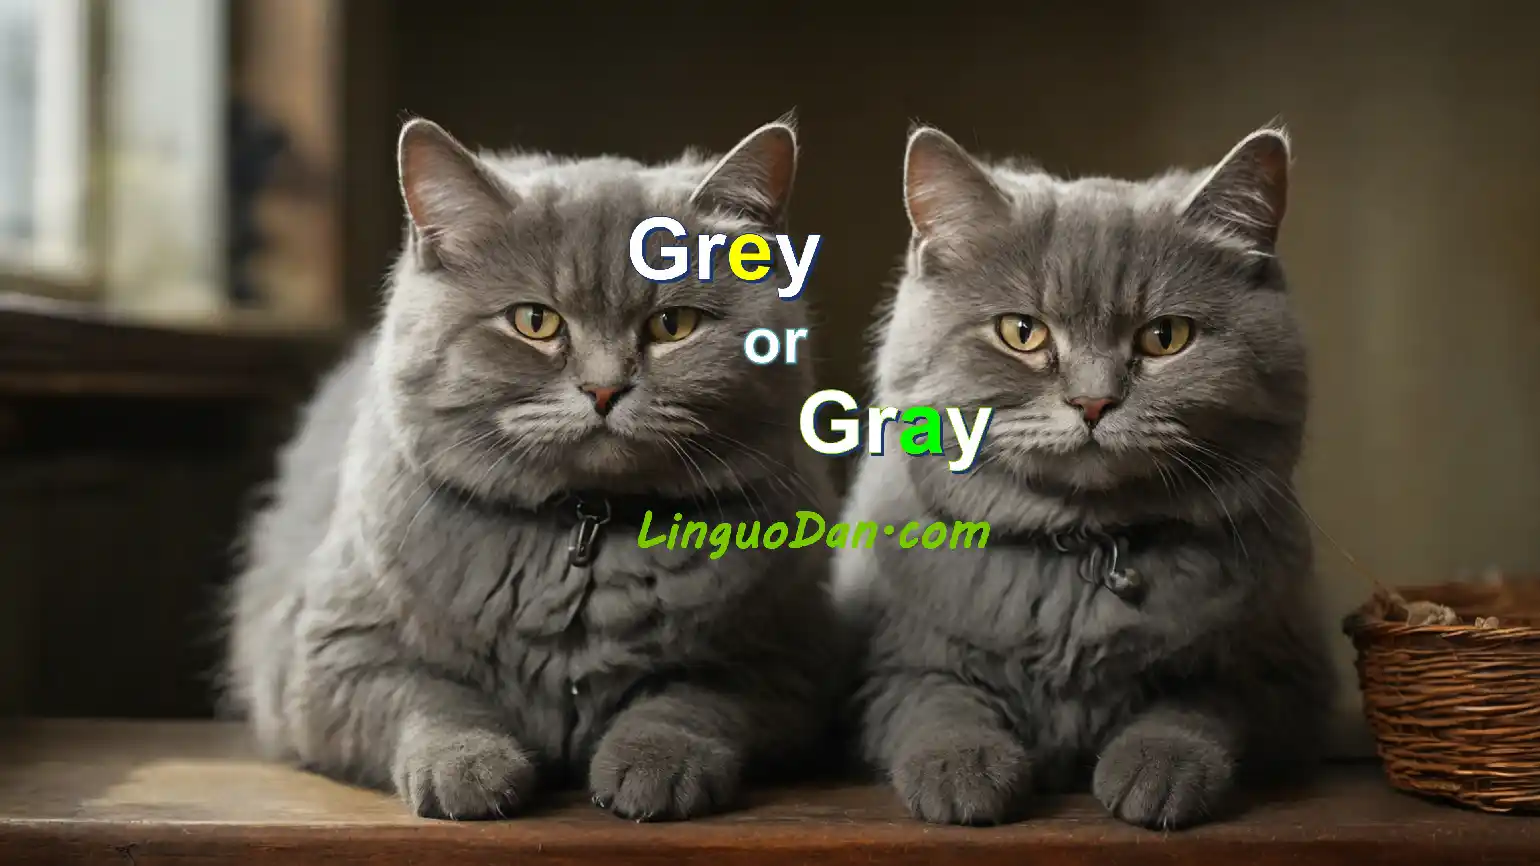 Gray or Grey - Are Both Correct?